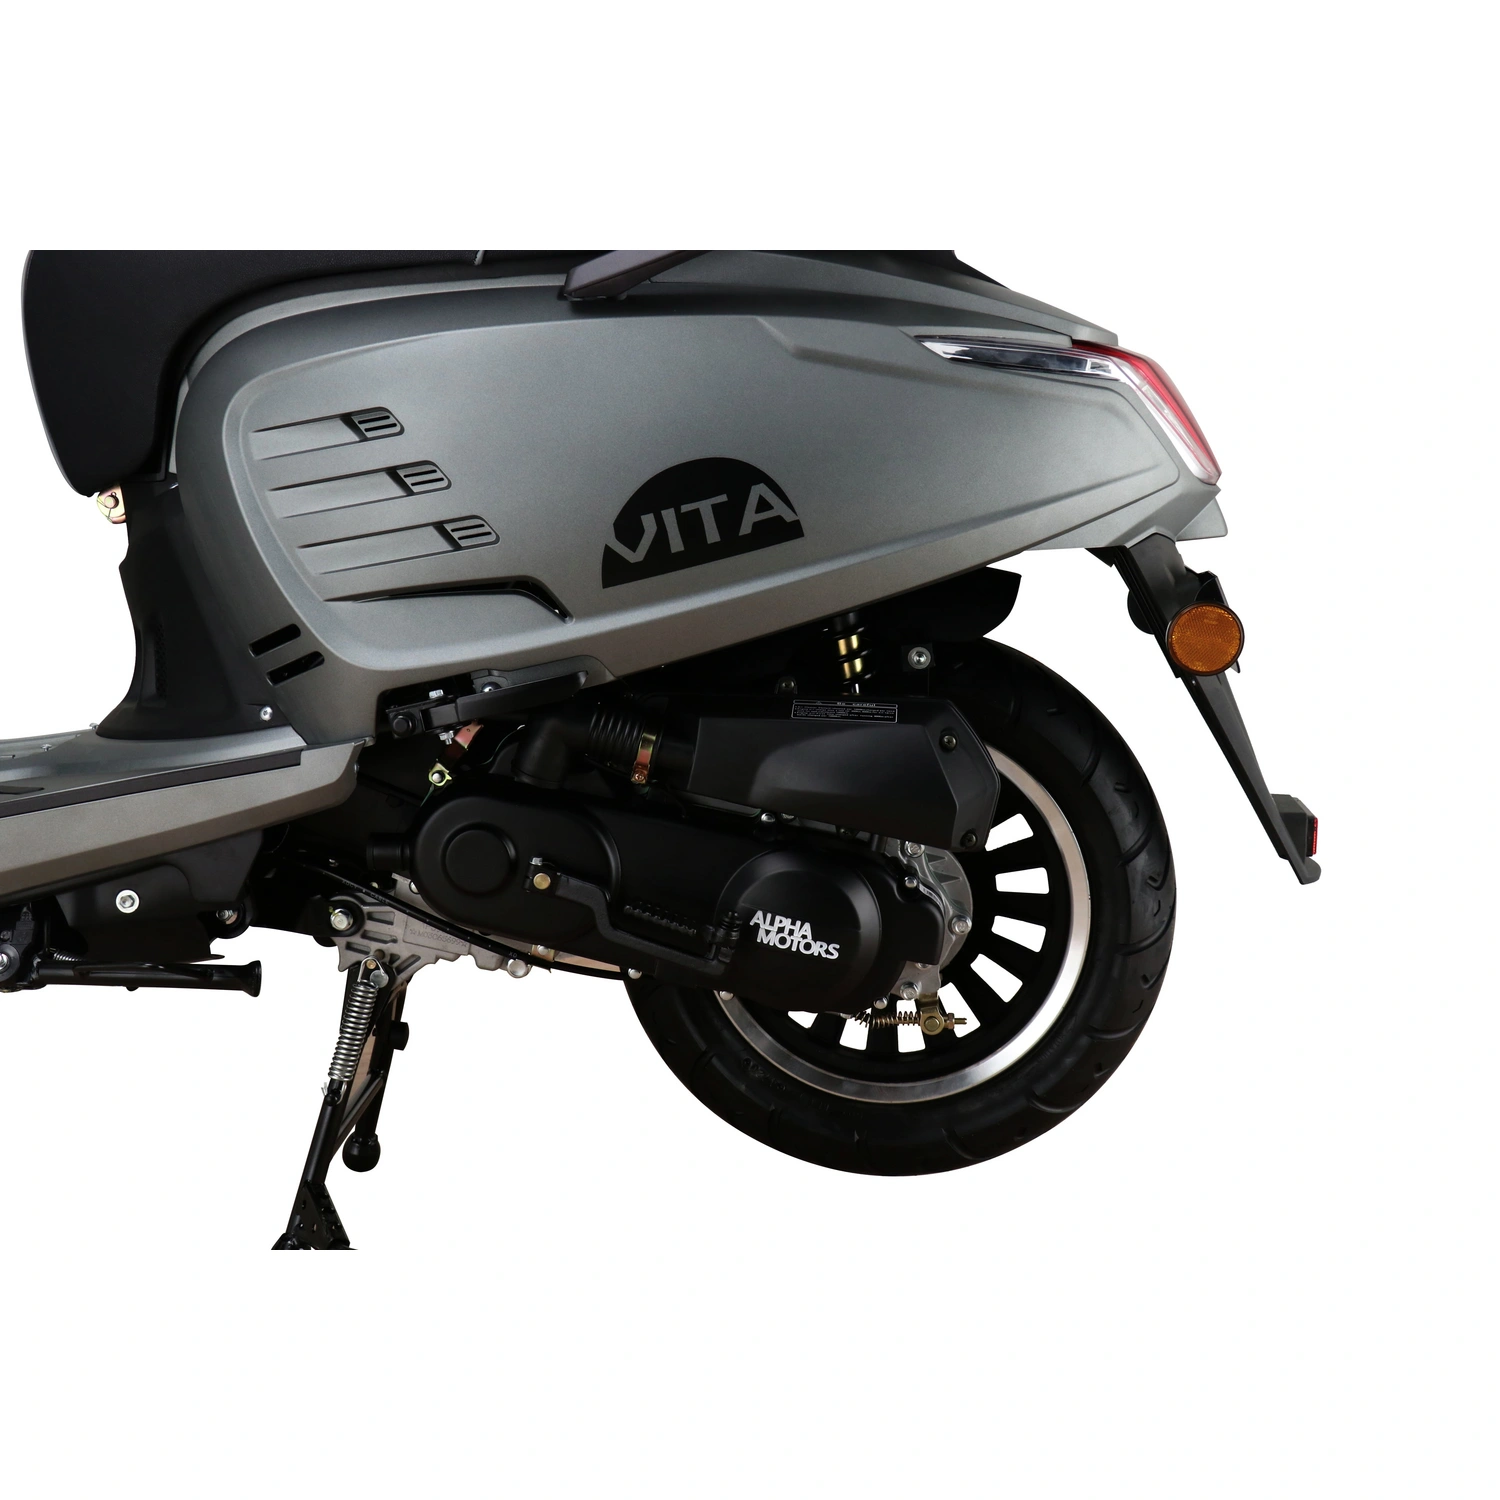 5 ALPHA Euro »Vita«, 50 cm³, Motorroller 45km/h, MOTORS